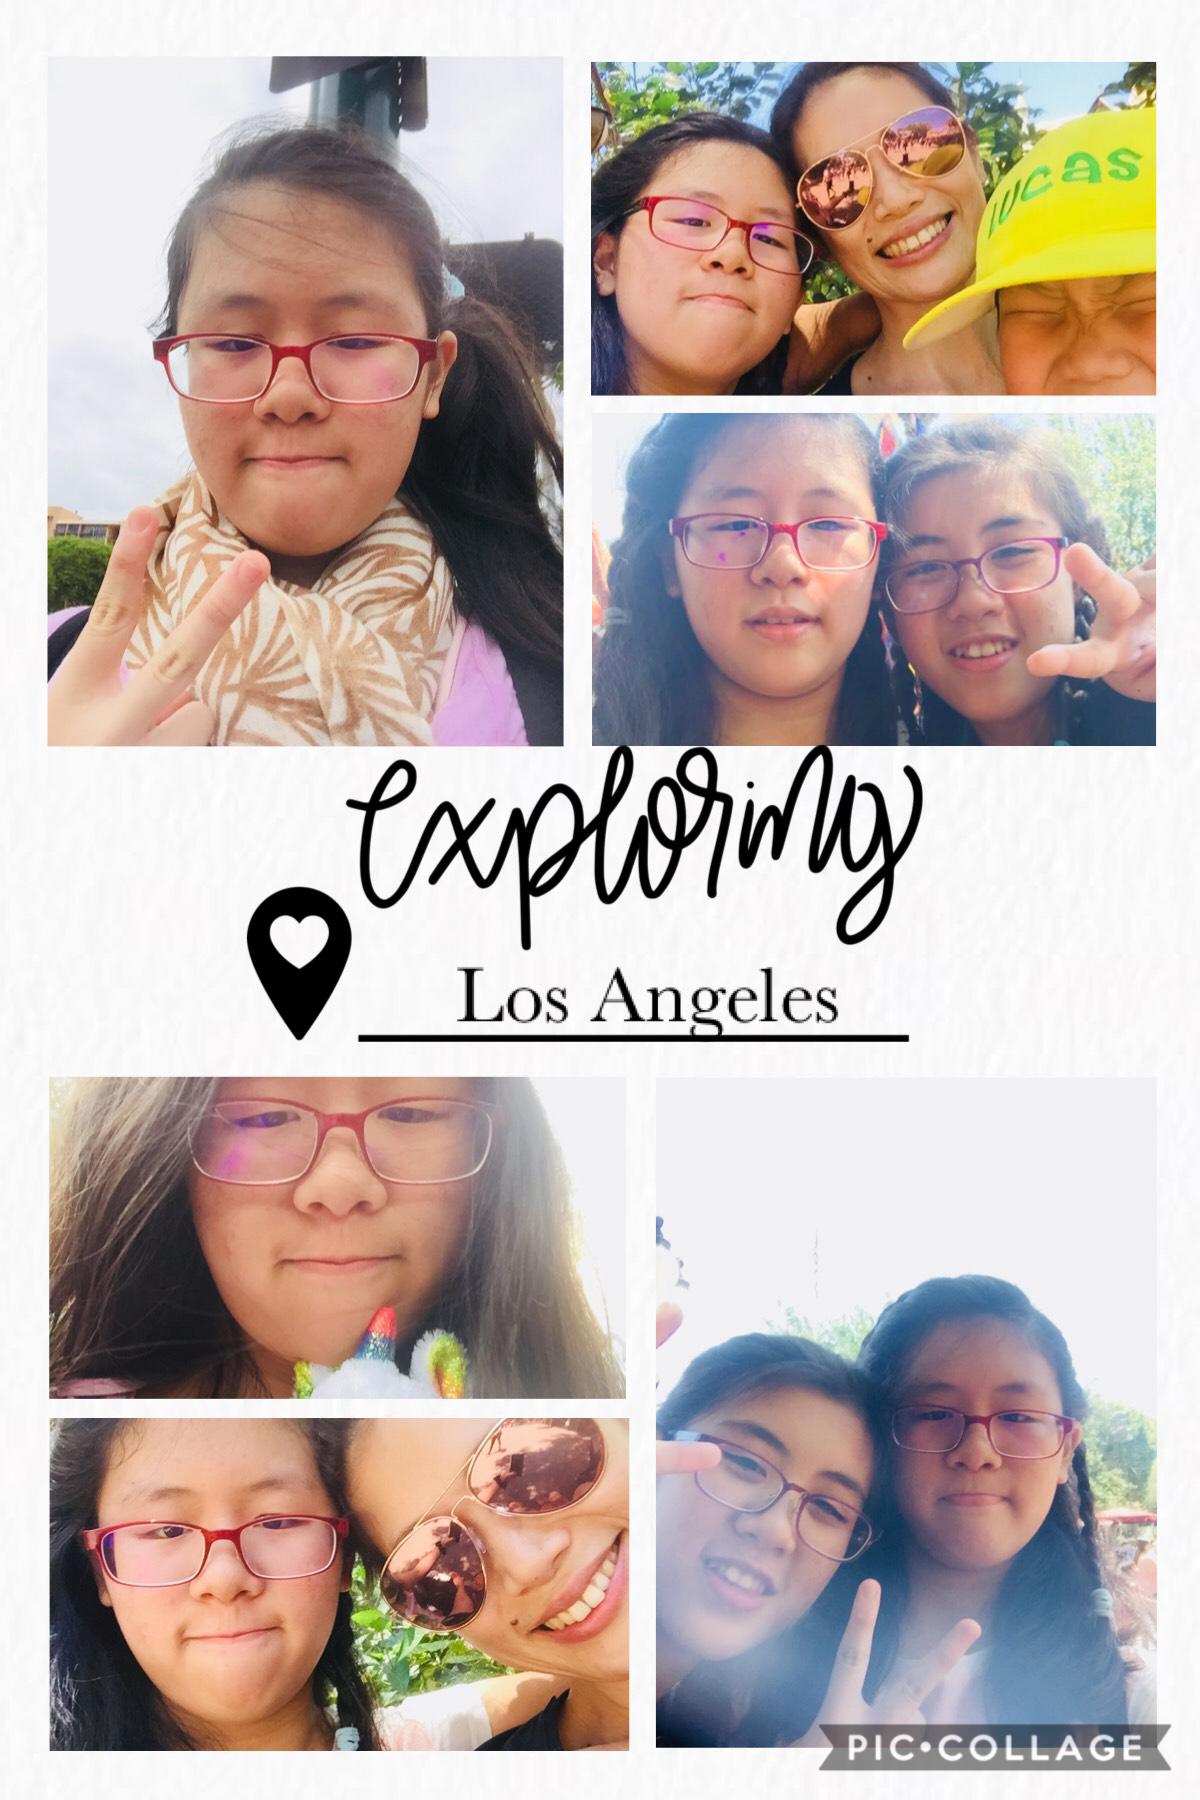 #LA #Disneyland #ExploreDeWorld #FamilyNMe
#Mom #Sis #Bro. Hanging out together 